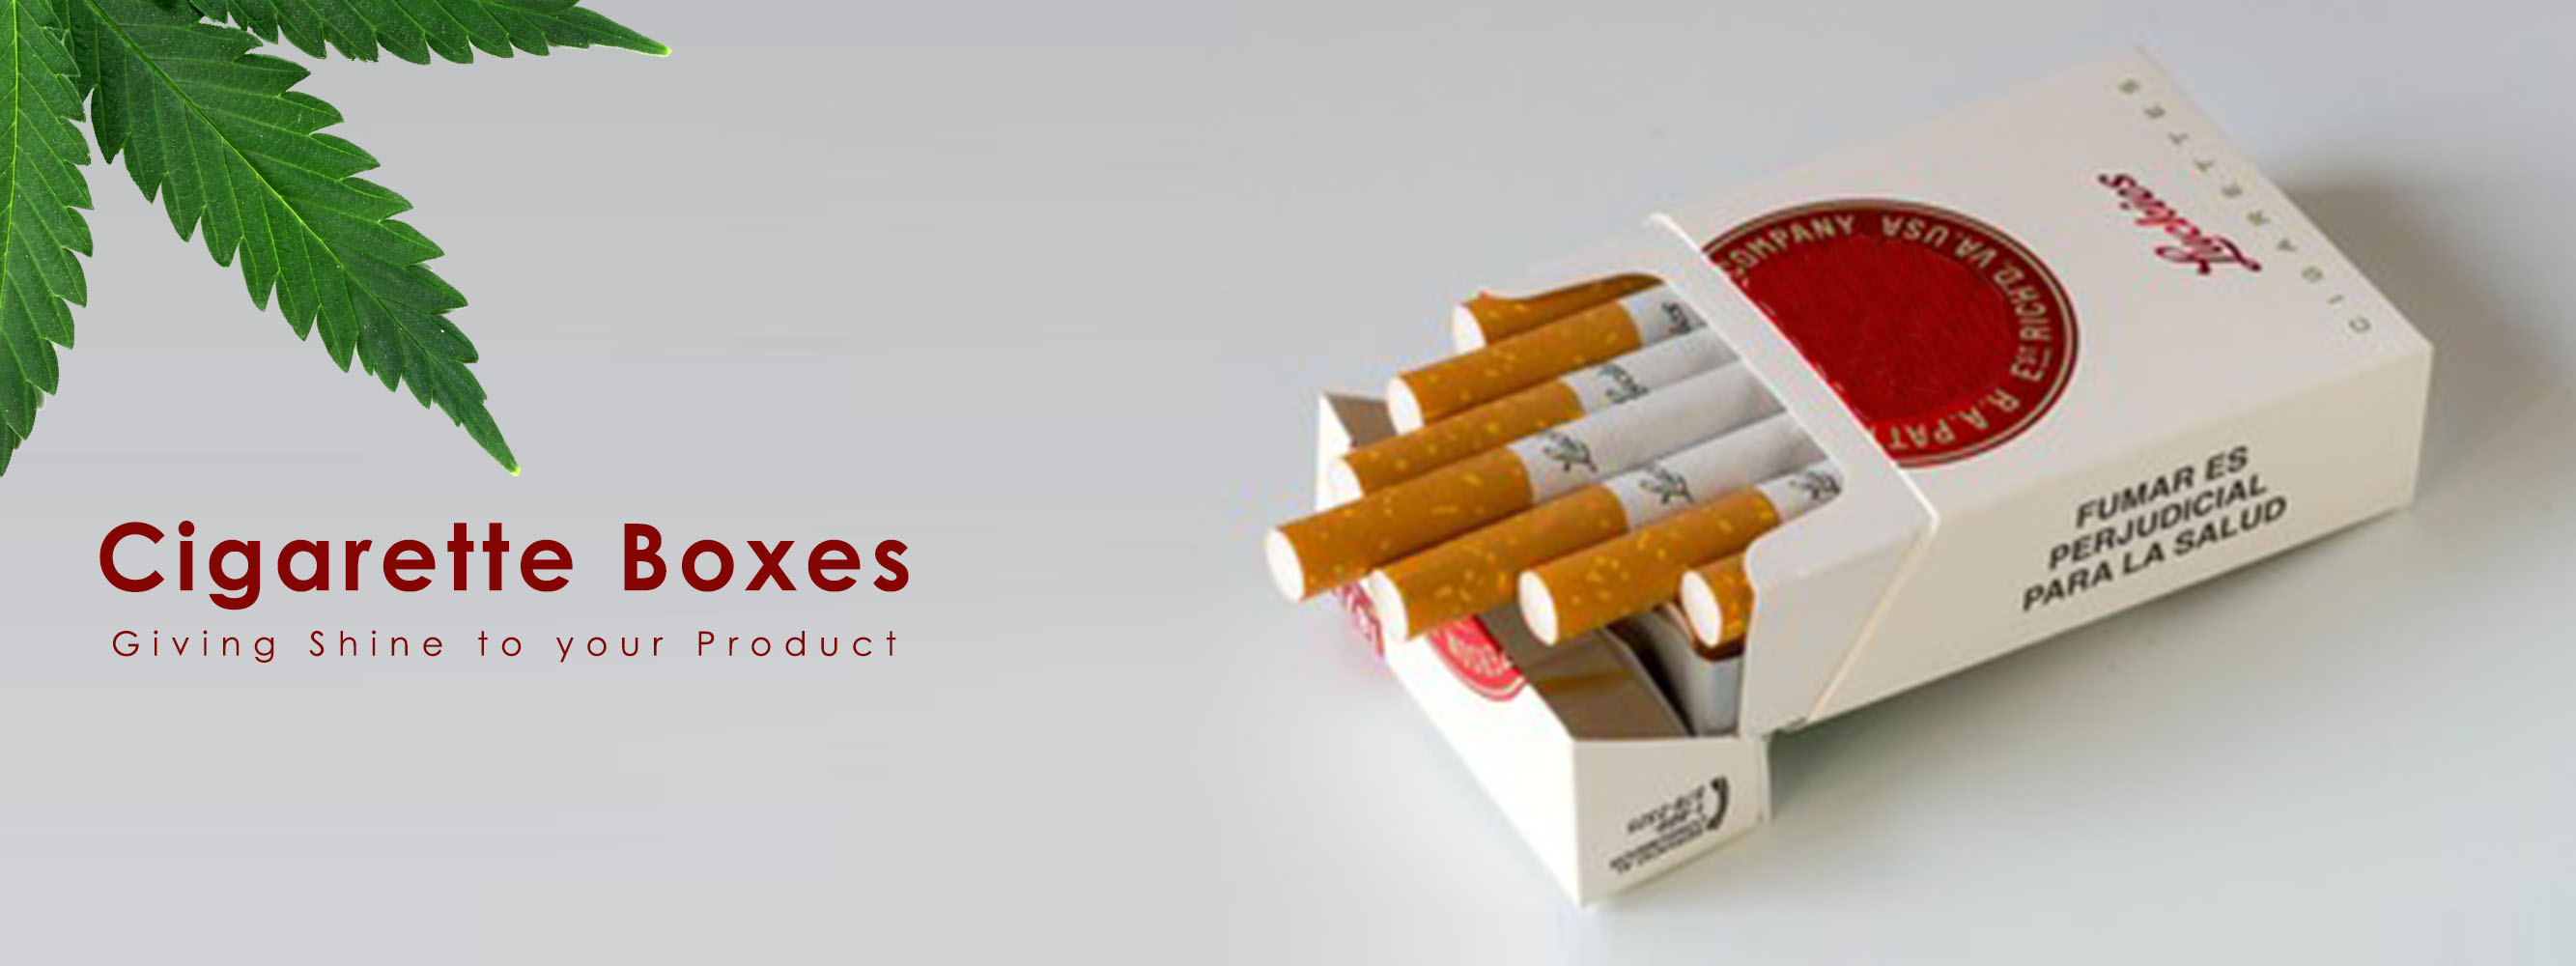 How Cigarette Boxes Make These Classy Cigarettes